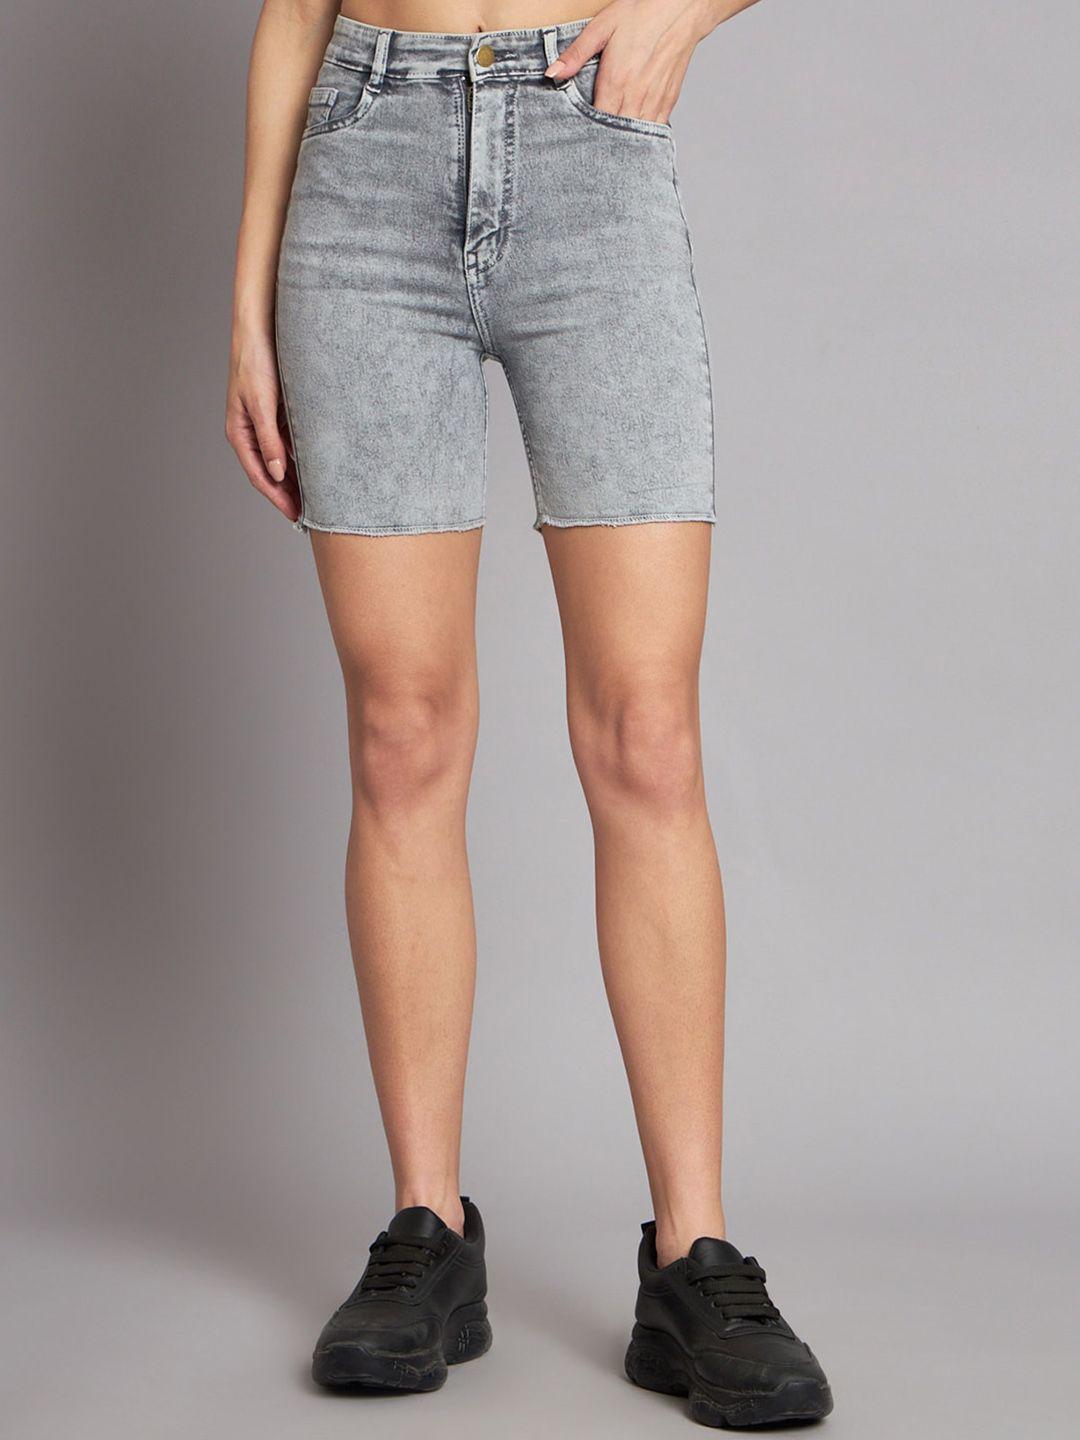 guti-women-high-rise-cotton-denim-shorts